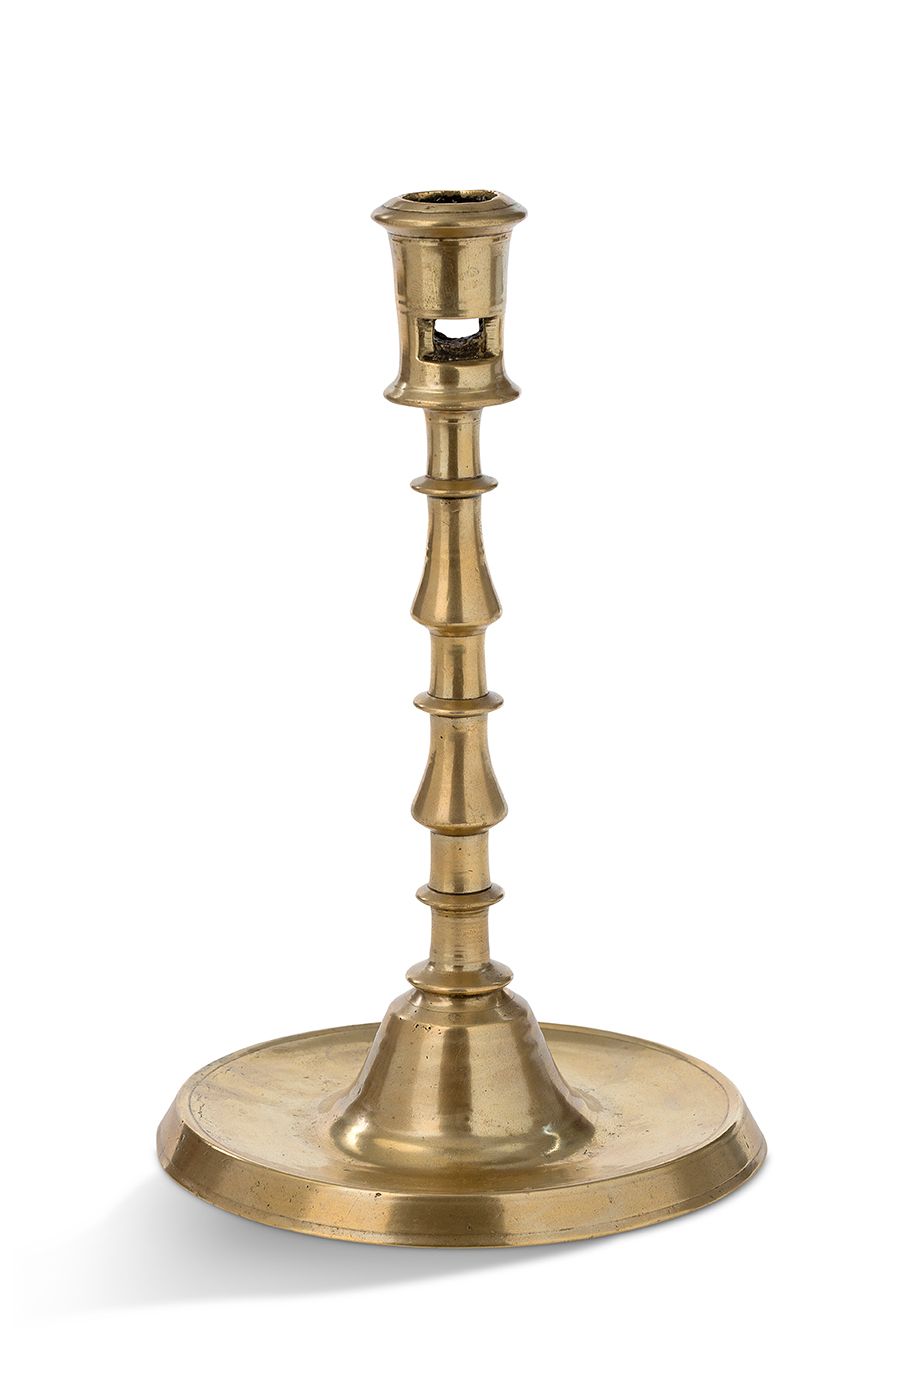 Null 一个青铜烛台，站在一个扁平的模制底座上。它的轴由环状物和一个栏杆组成，上面有一个带肩的圆柱形龙头和两个长方形的窗口。
法国或佛兰德斯，16世纪末
H.&hellip;